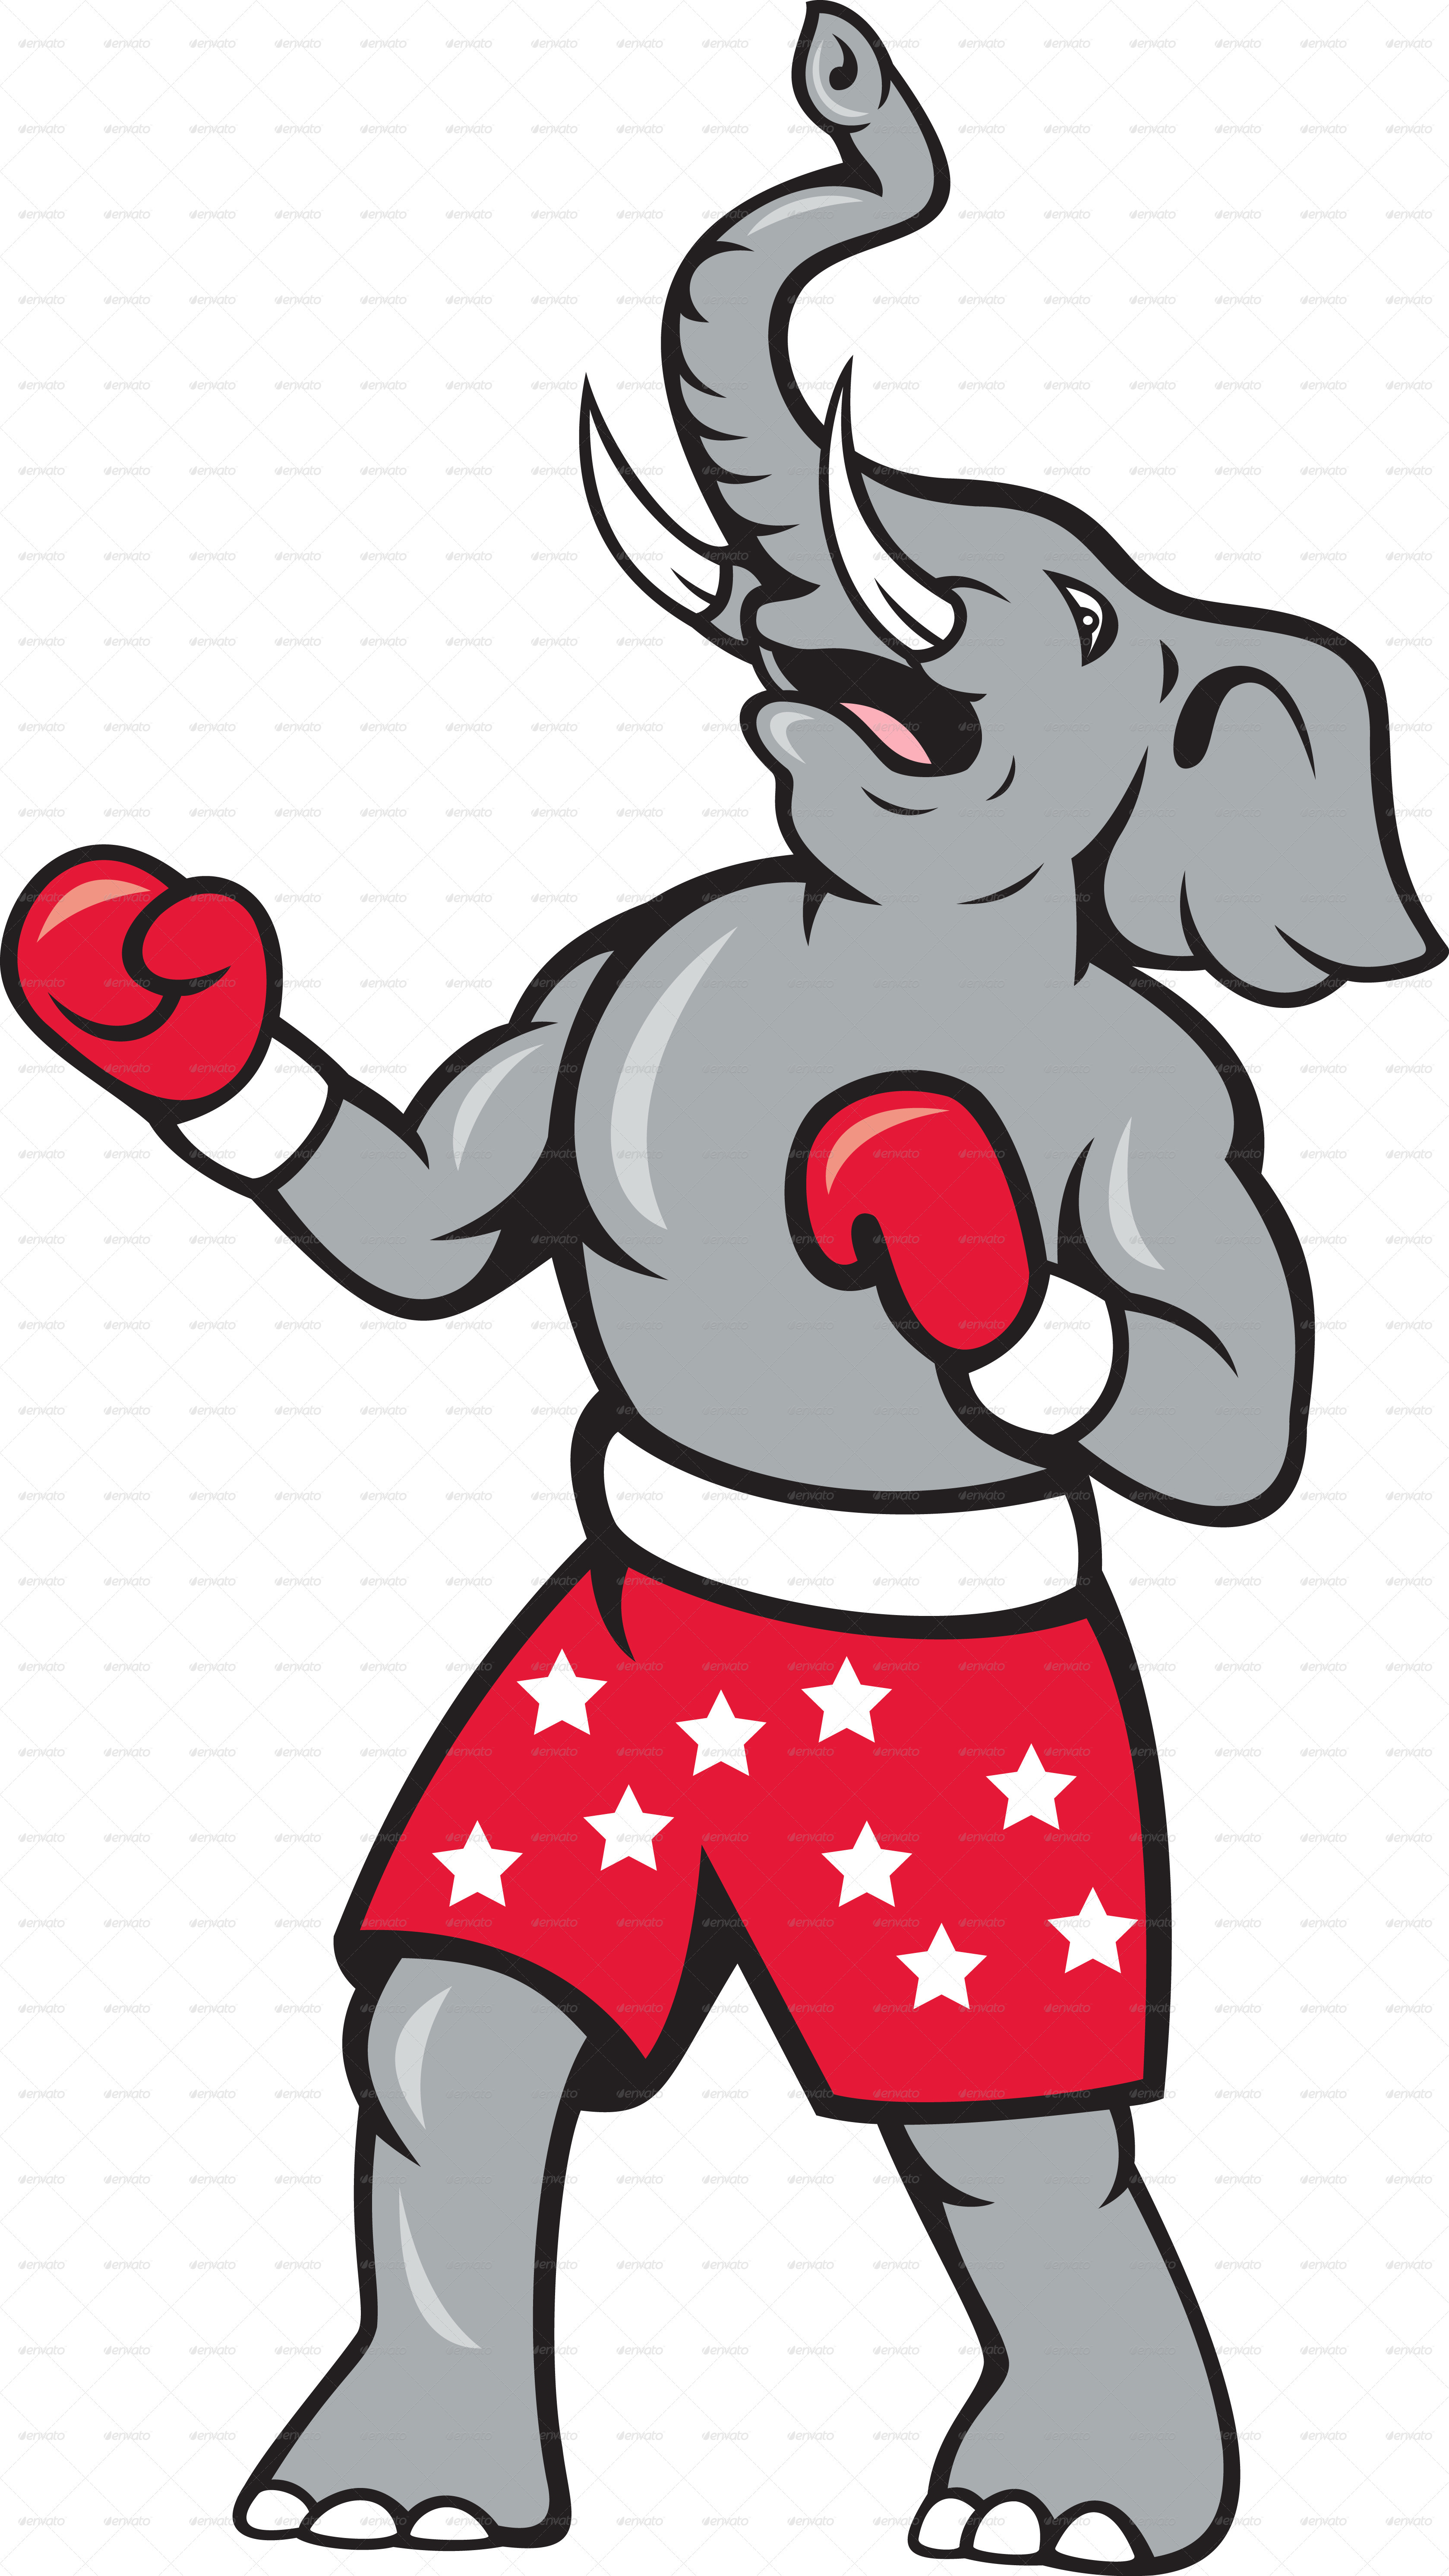 Elephant Boxer Boxing Stance by patrimonio | GraphicRiver